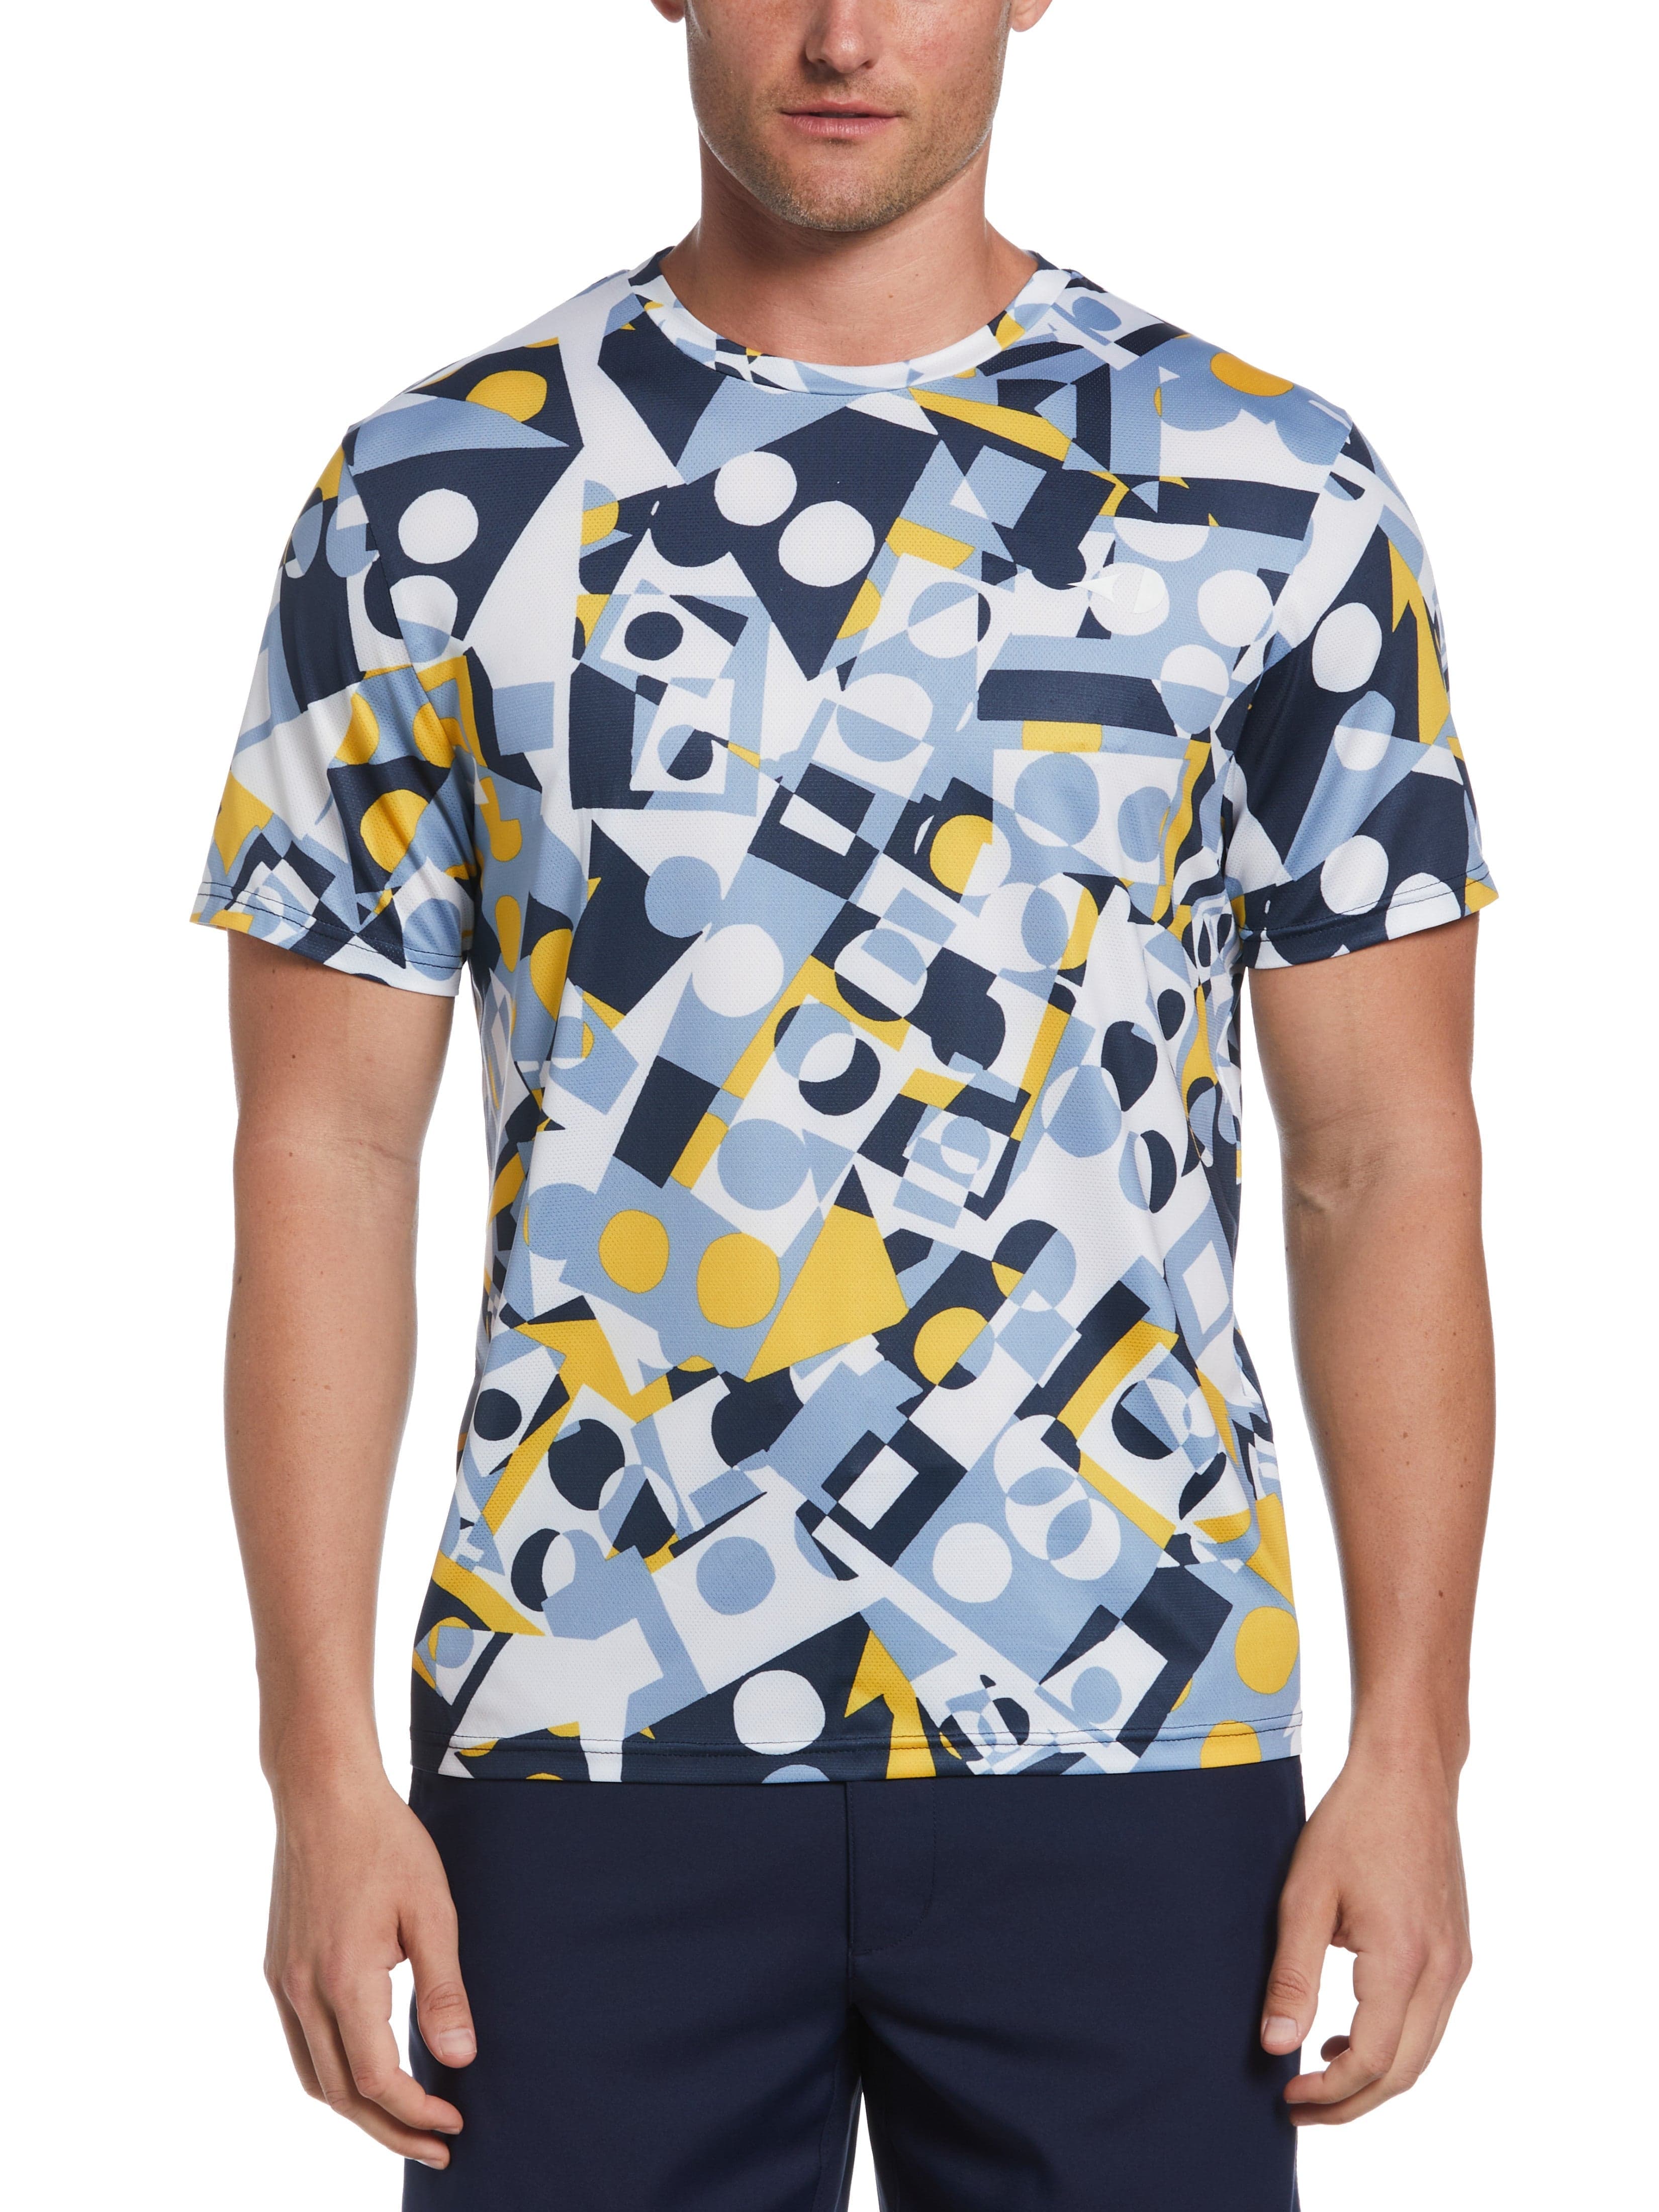 Grand Slam Mens Abstract Multi Geo Printed Crew Neck Tennis Shirt, Size Medium, Navy Blue, Polyester/Spandex | Golf Apparel Shop